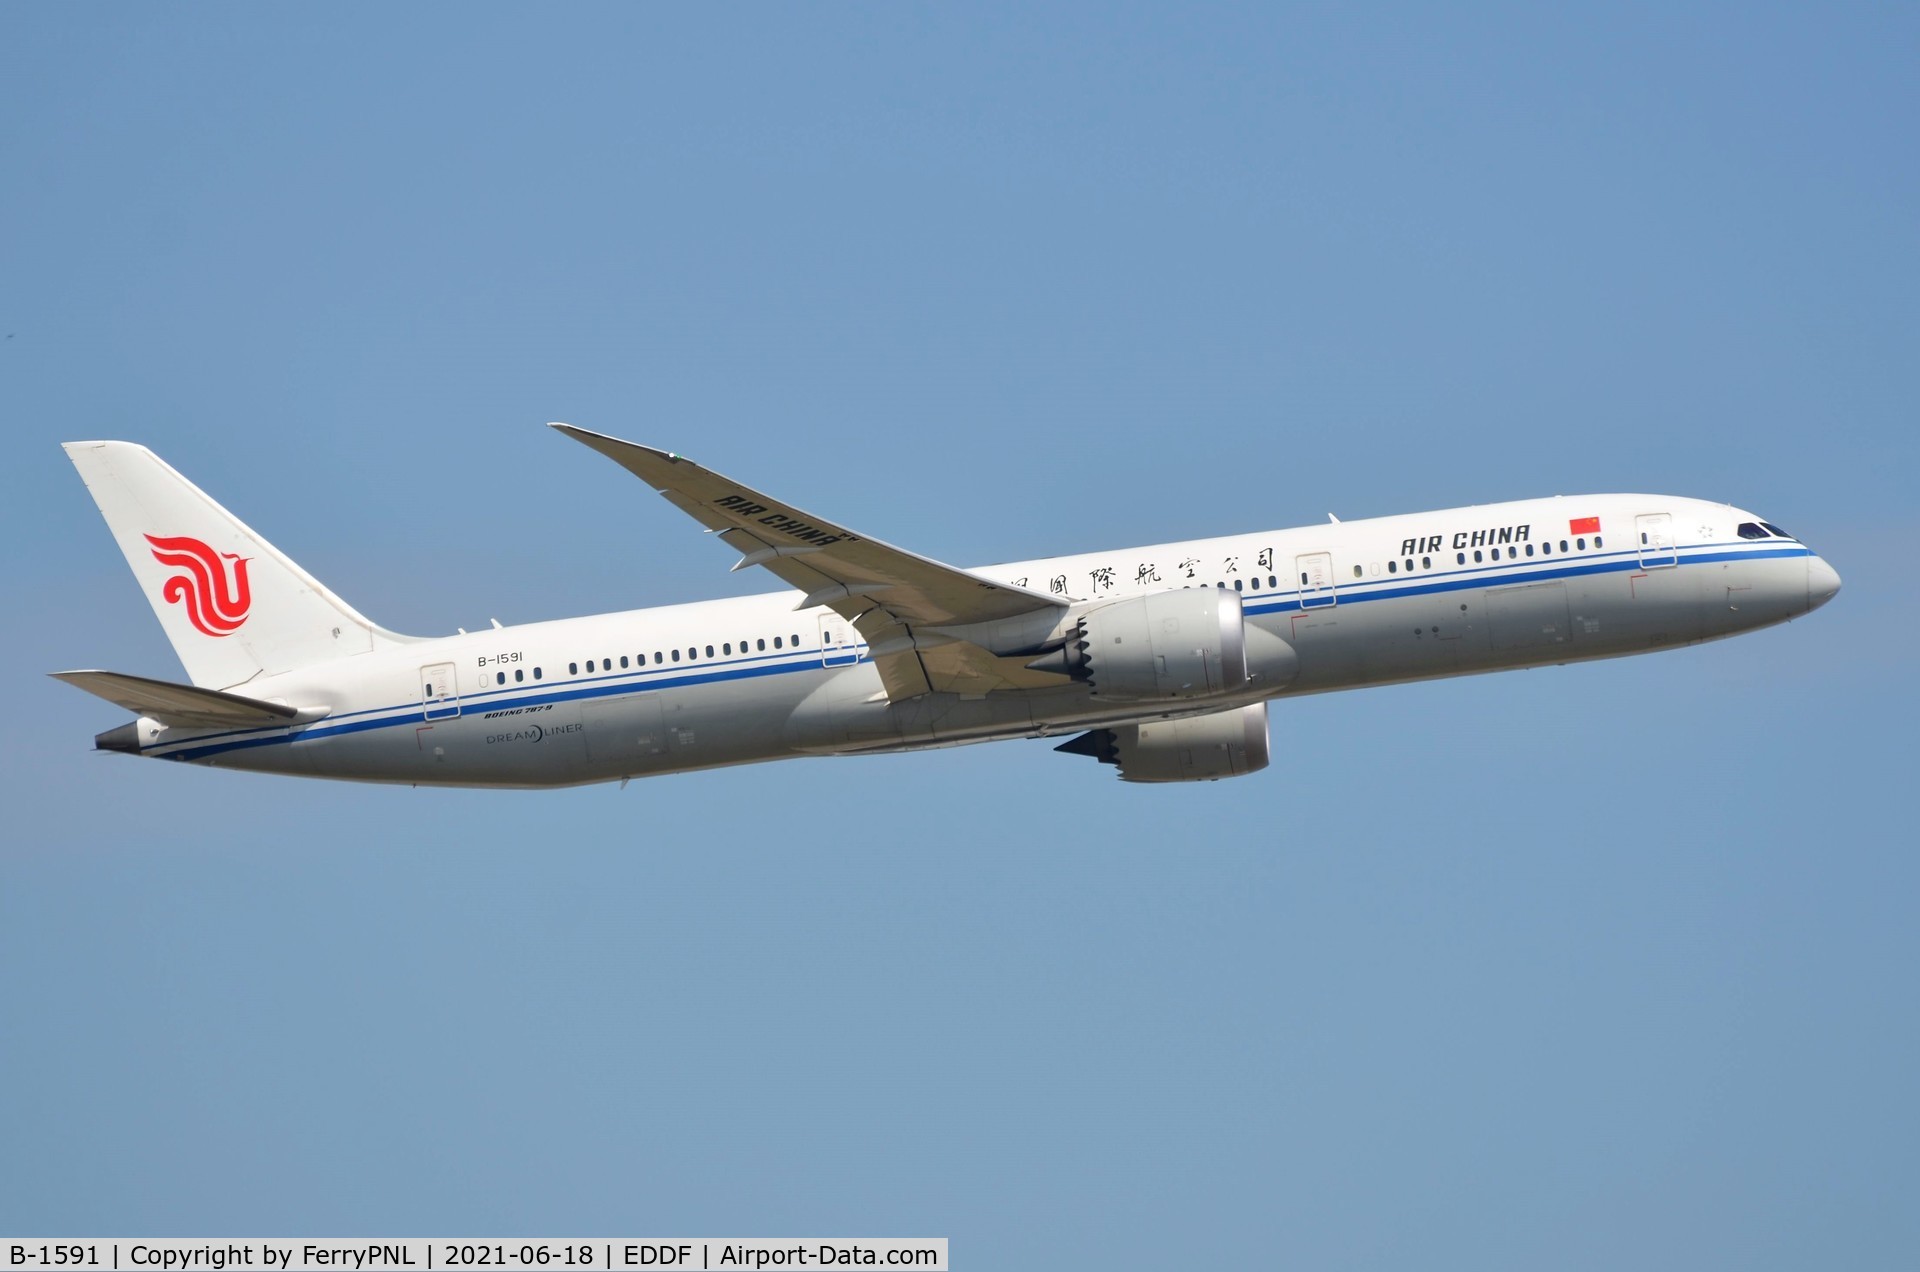 B-1591, 2017 Boeing 787-9 Dreamliner Dreamliner C/N 34312, Air China B789 starting its journey back home